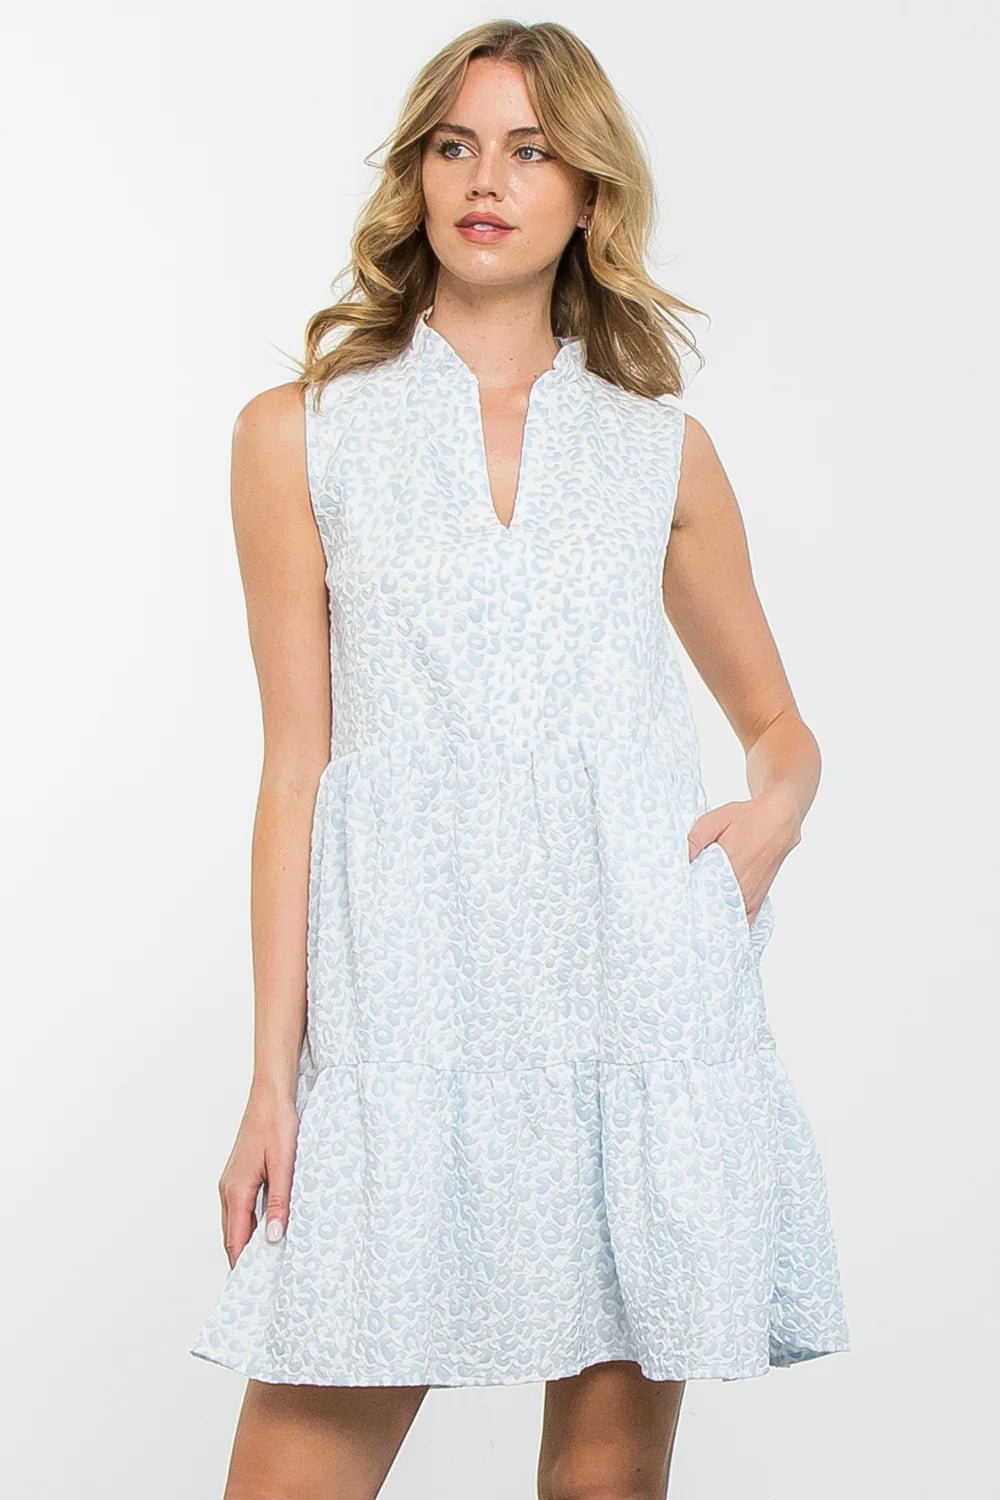 Sleeveless Cheetah Print Dress - Lush Lemon - Women's Clothing - THML - 178217821